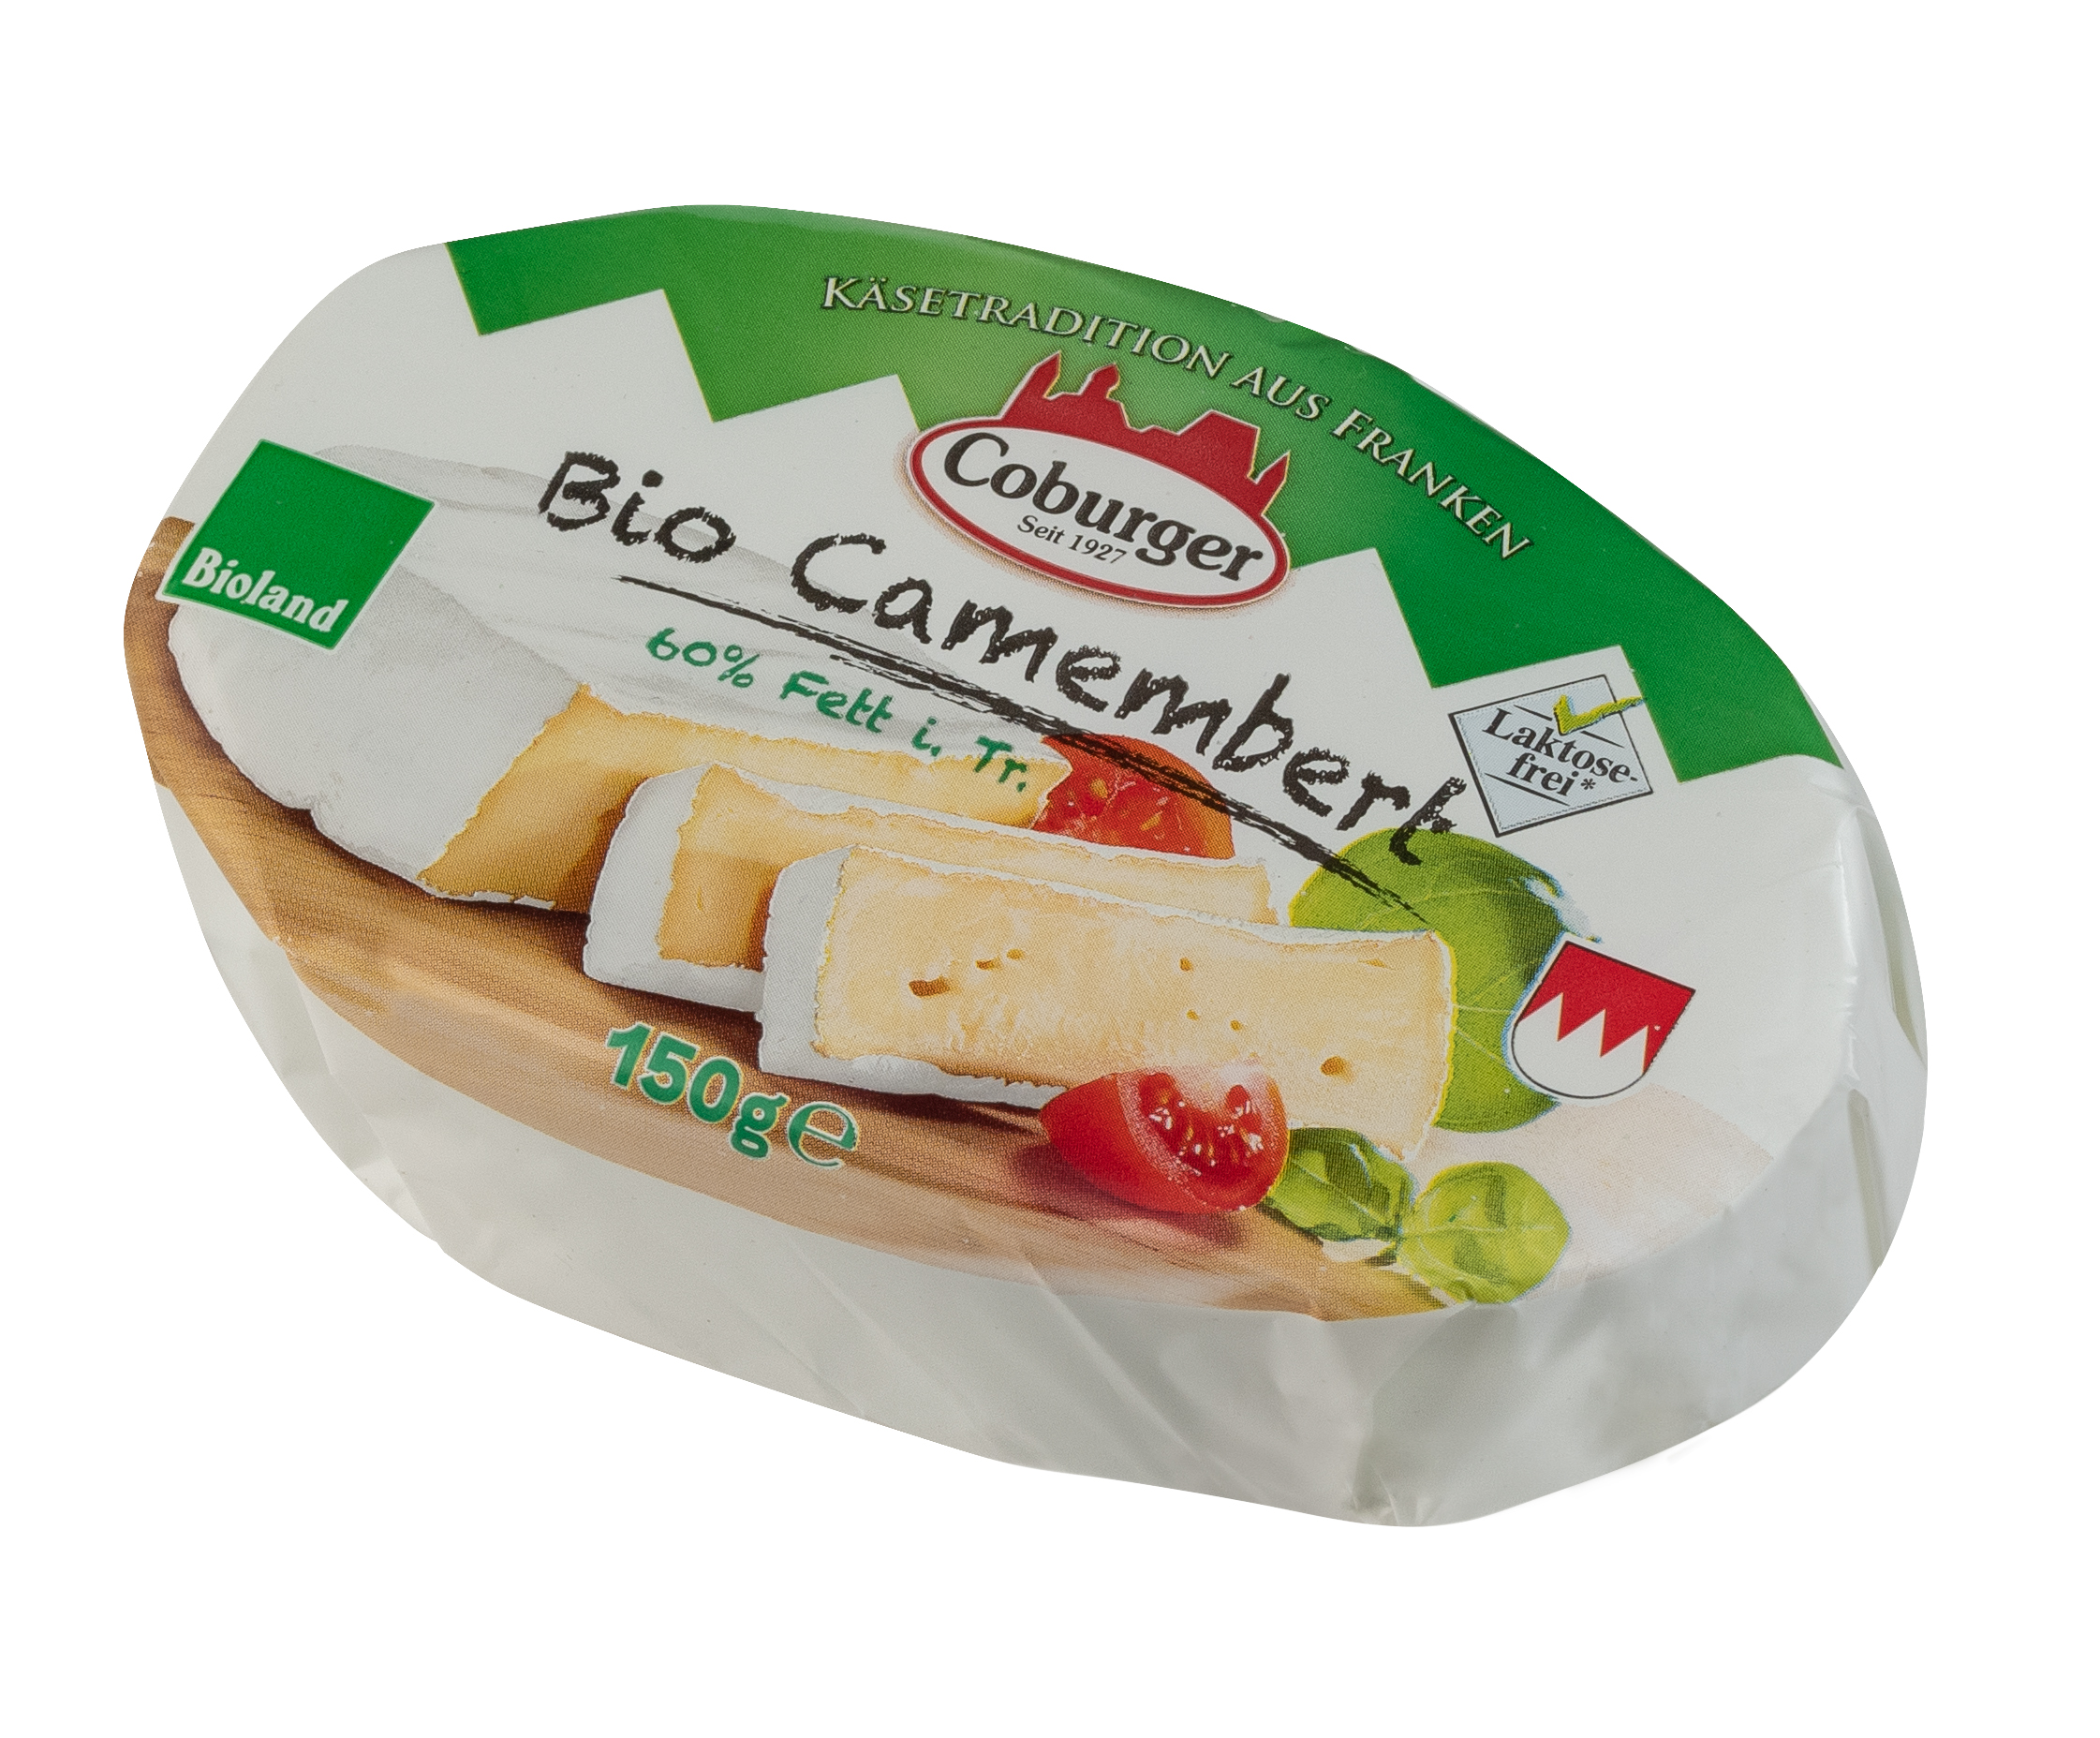 Coburger Bioland Camembert oval, 150g - Milchwerke West Oberfranken